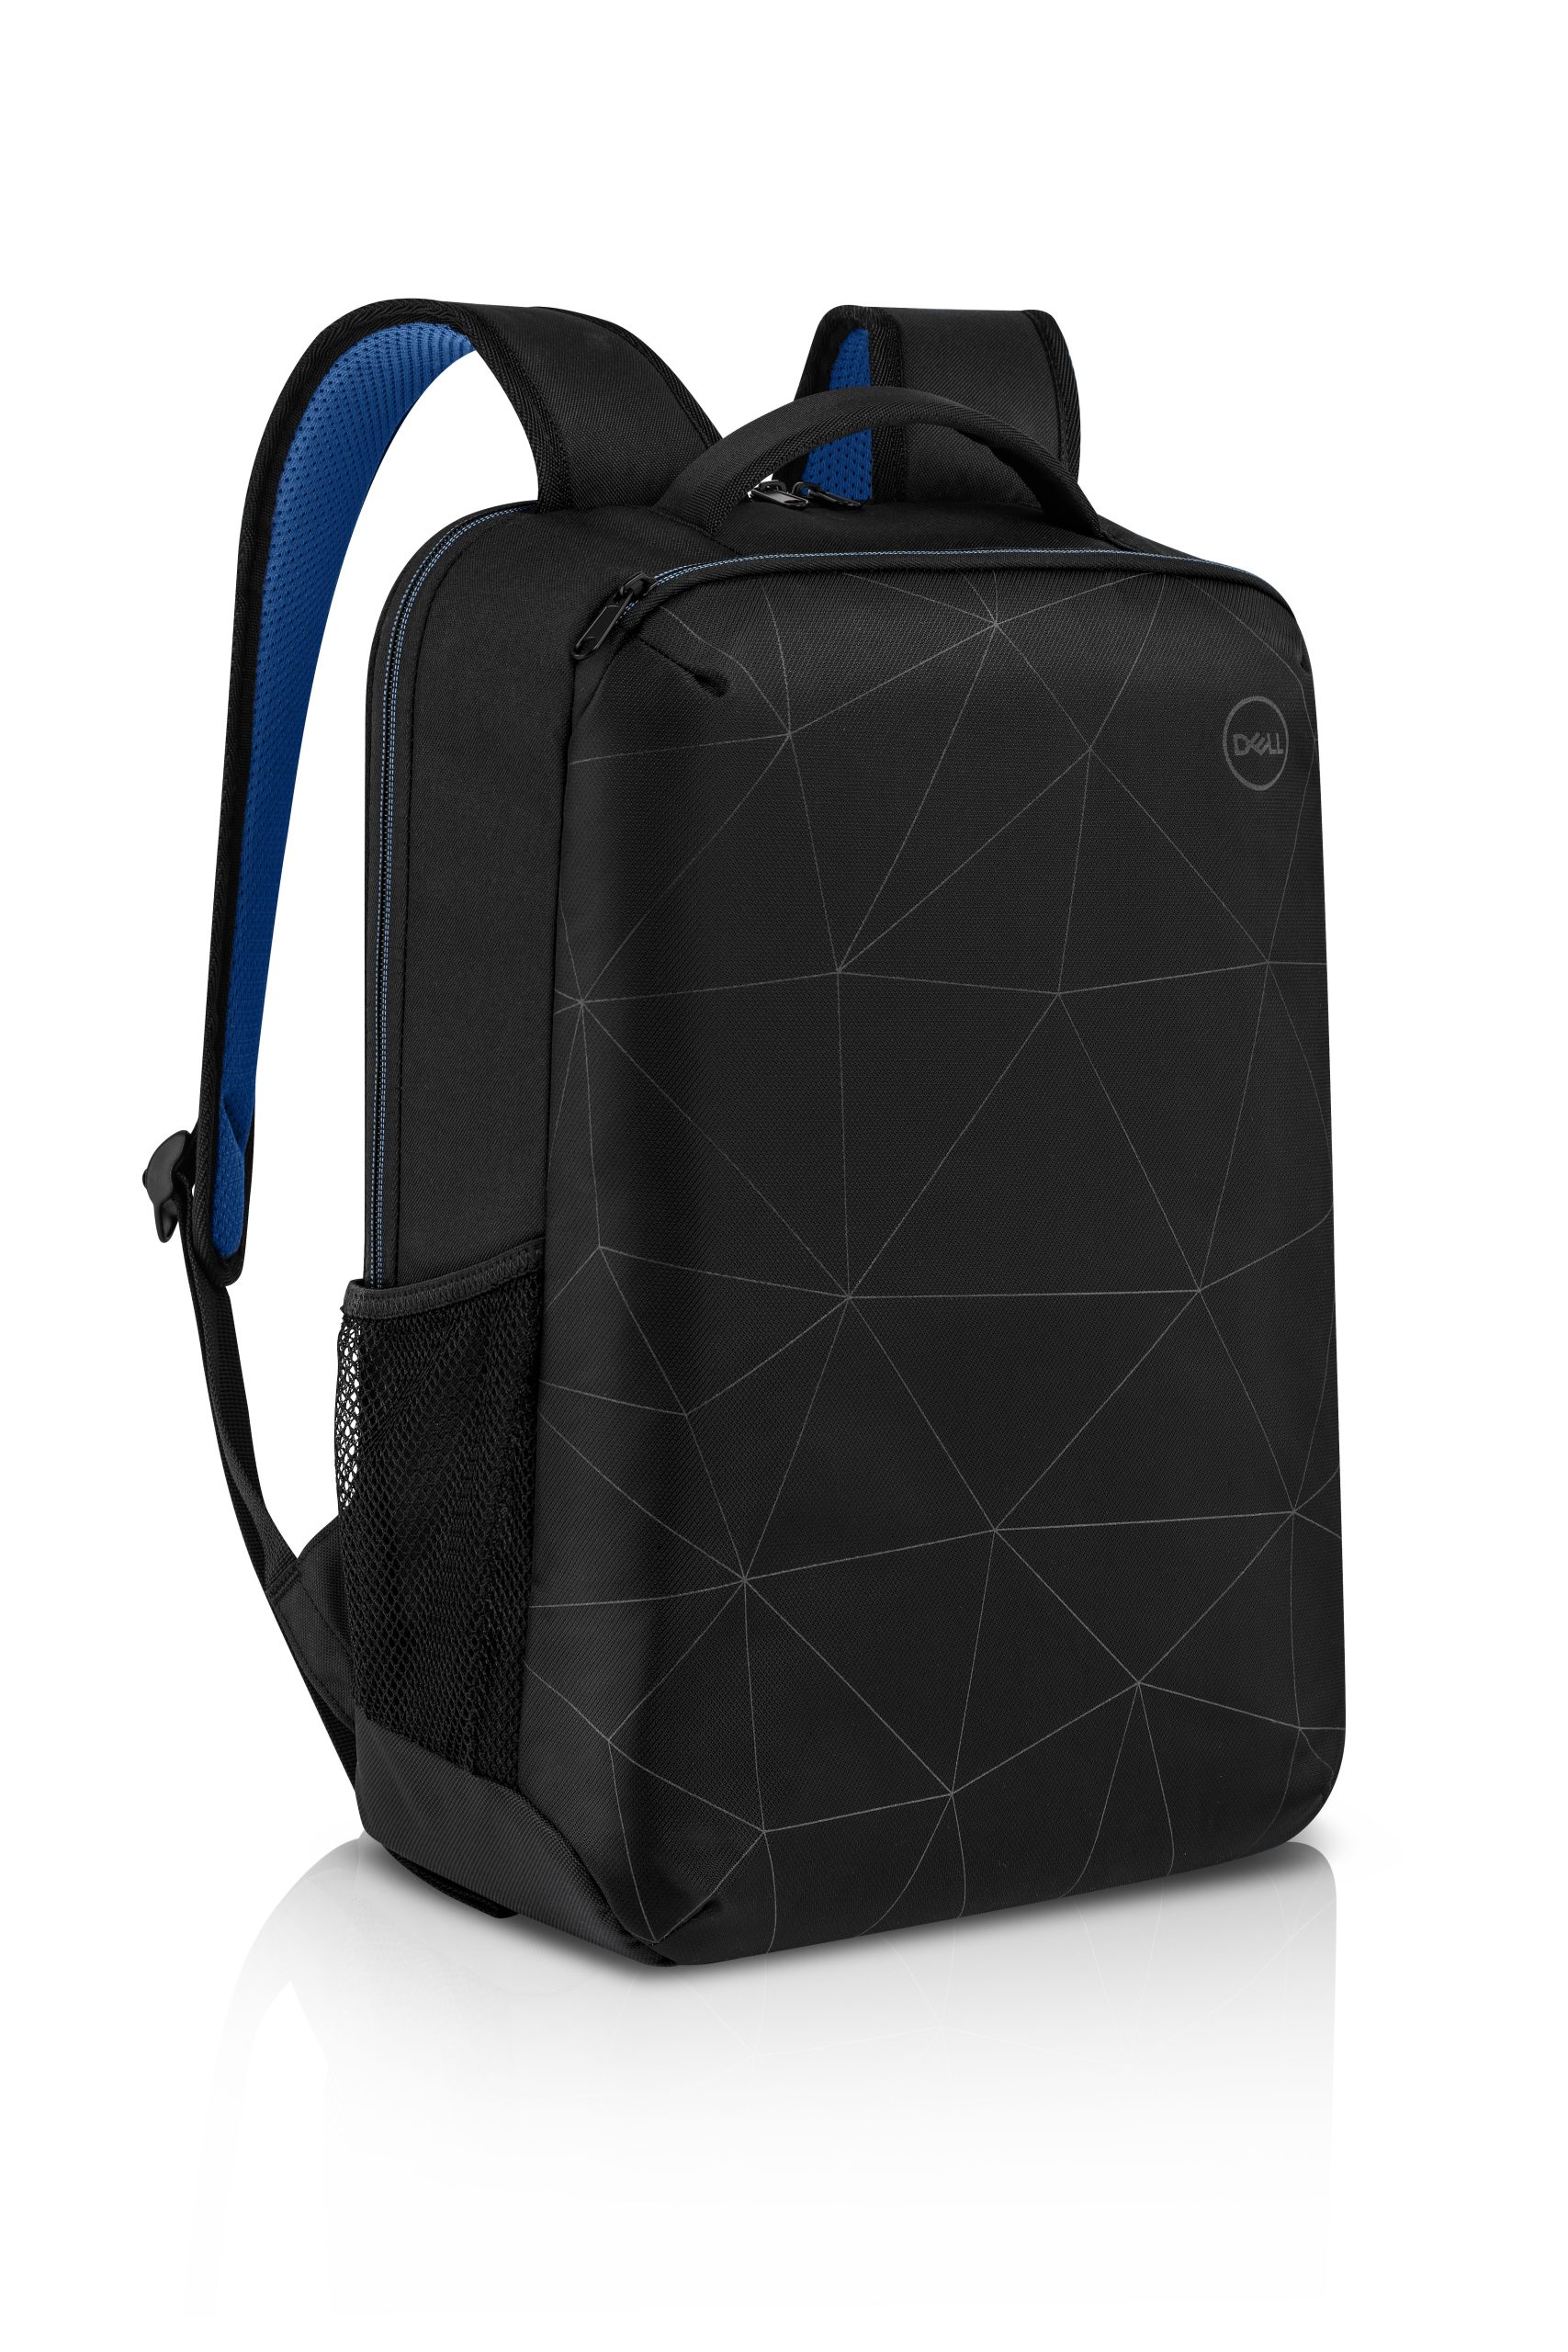 Mochila Essential Backpack-15 DELL ES1520P - 15 pulgadas